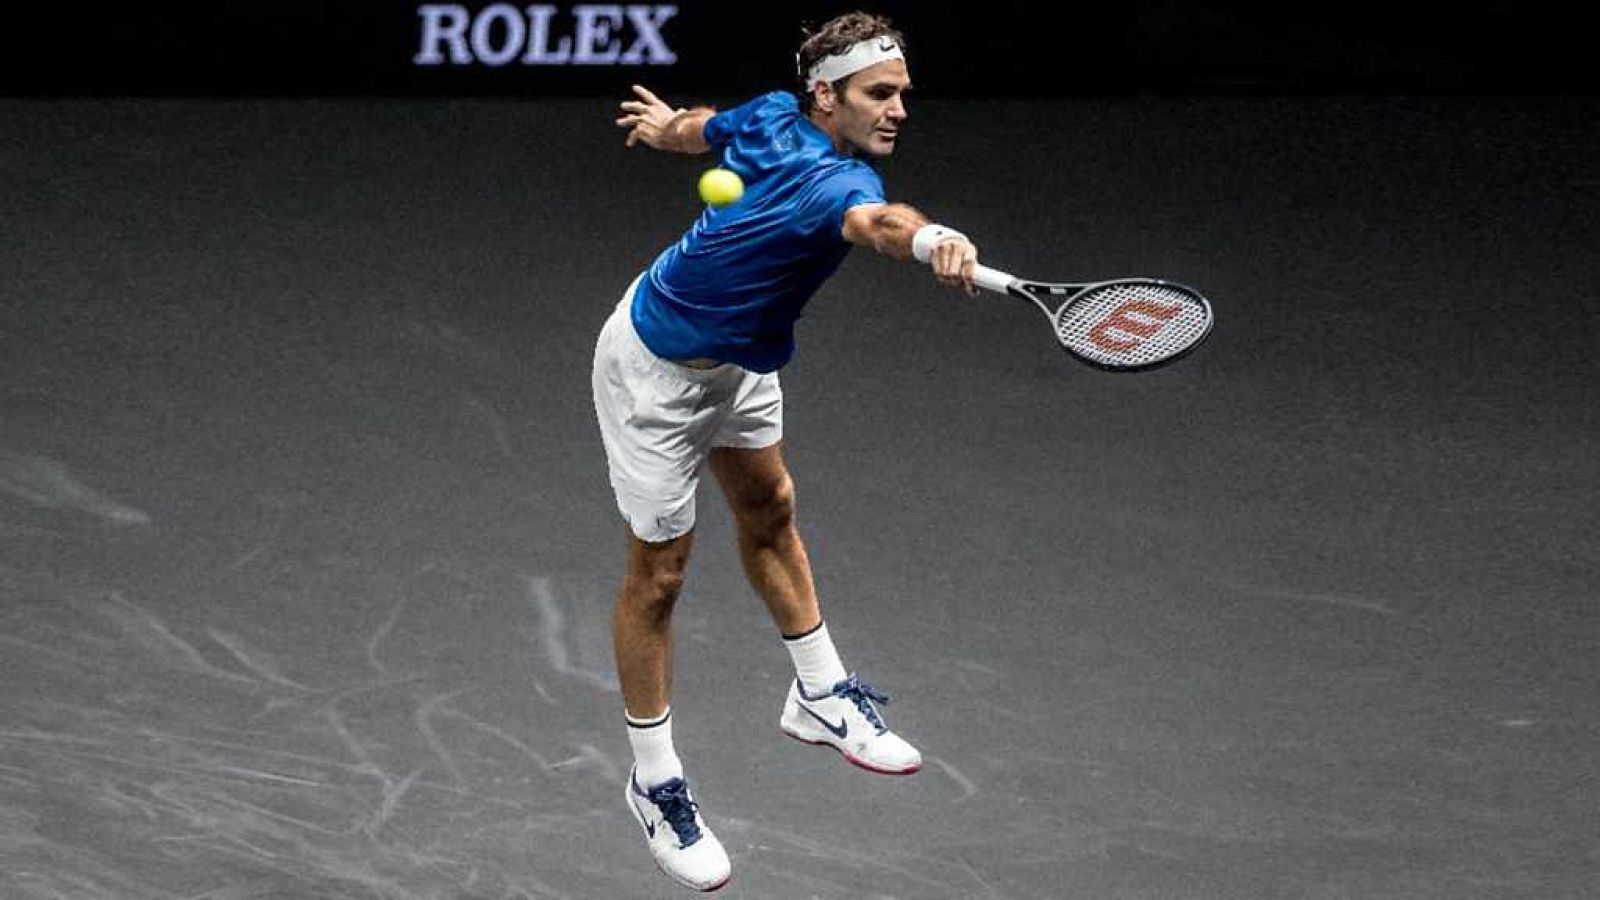 Tenis - Laver Cup 2017 Primer partido desde Praga: Roger Federer - Sam Querrey